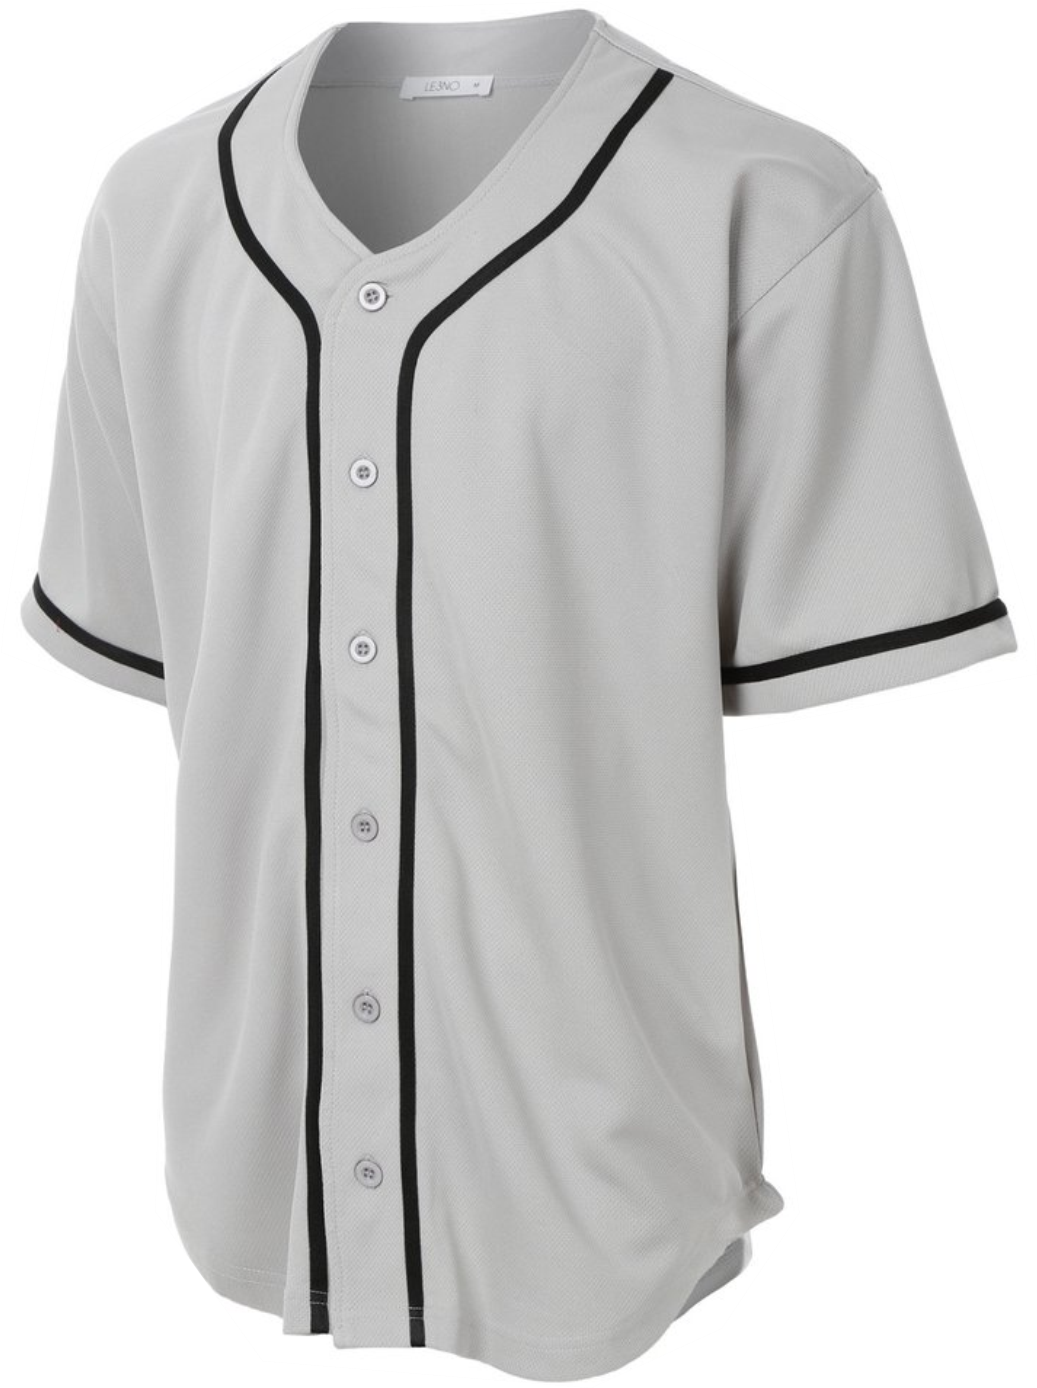 Blank Baseball Jersey Design PNG